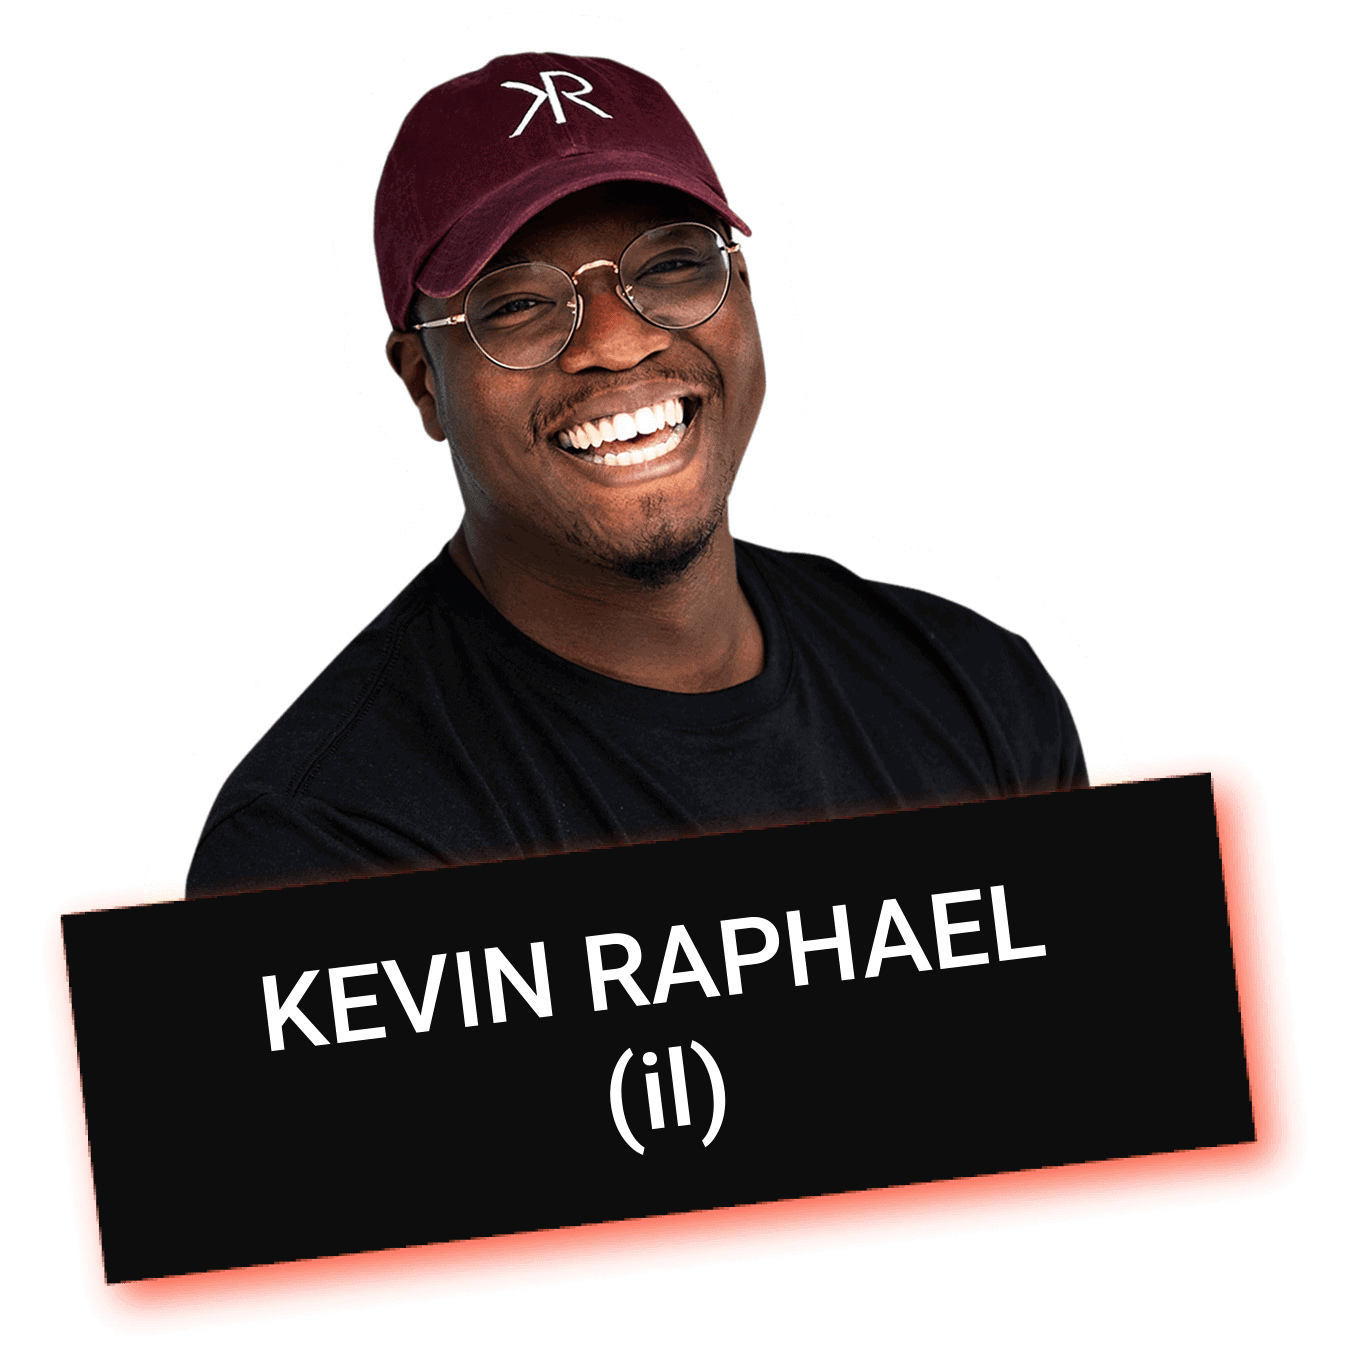 Kevin Raphael avec pronom